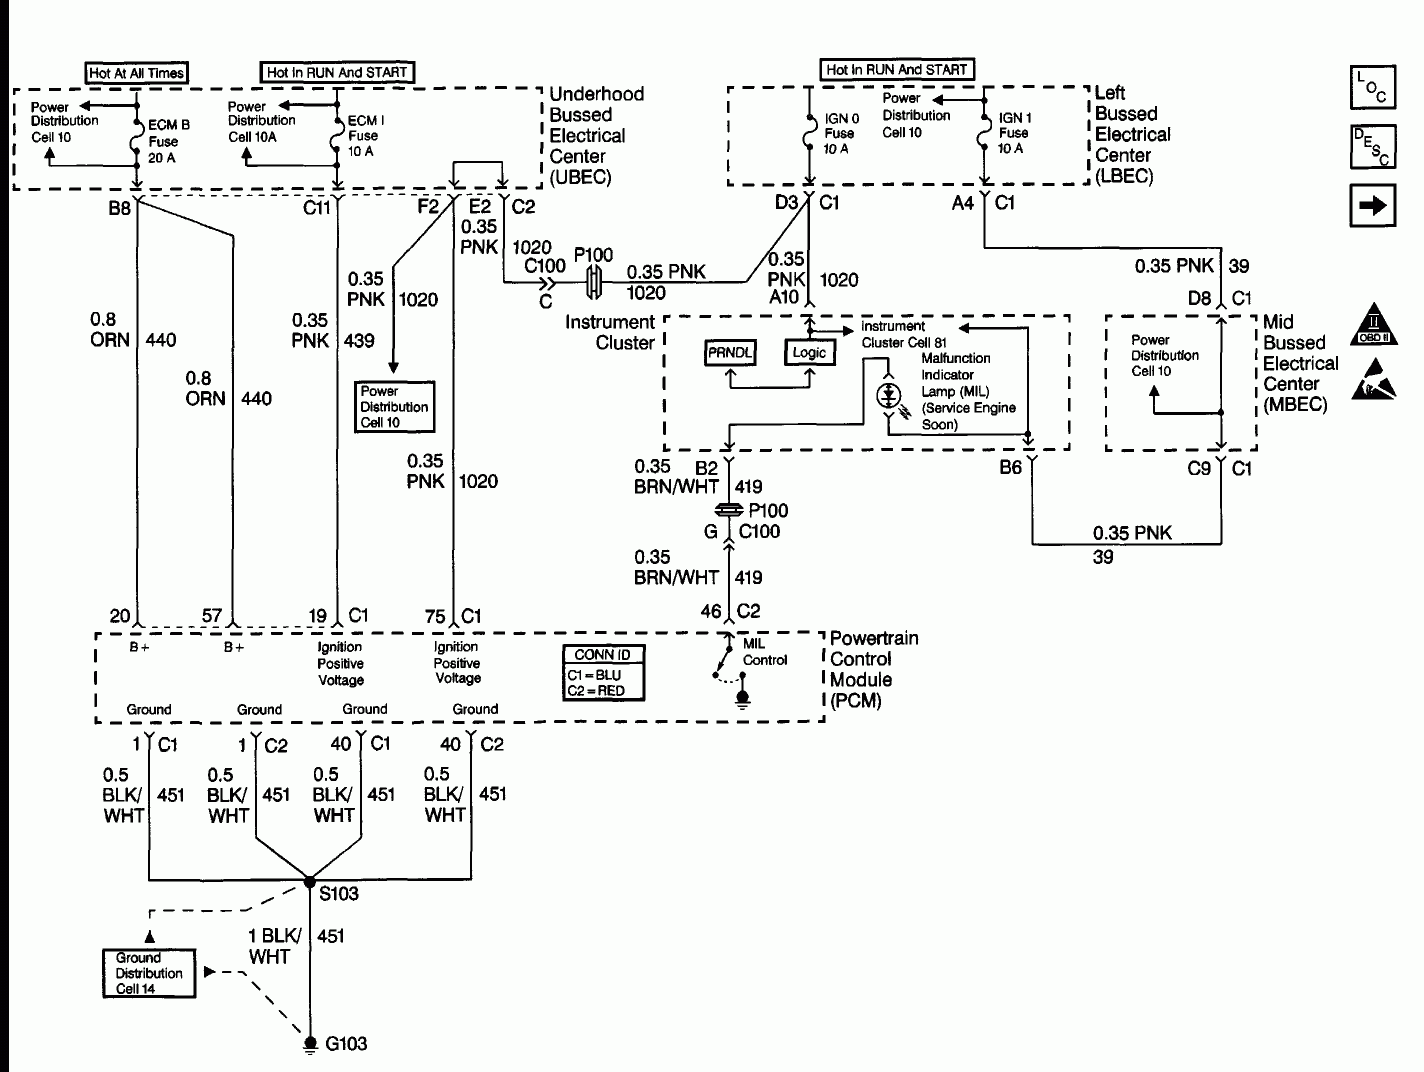 2001 Gmc Sierra Trailer Wiring Diagram